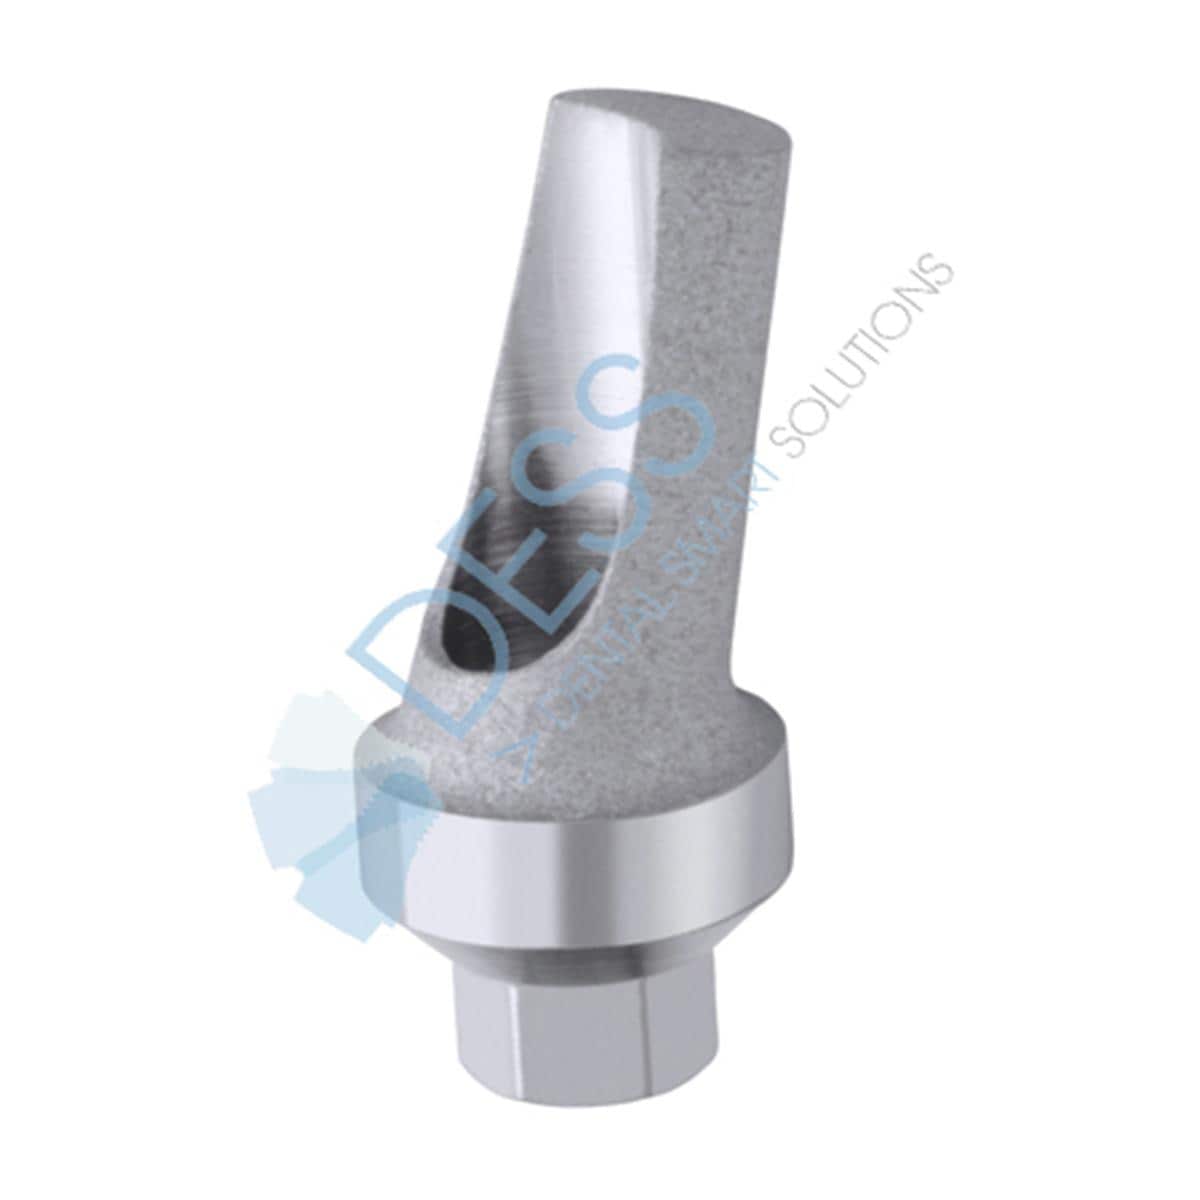 Titanabutment - kompatibel mit Zimmer Screw-Vent® - NP Ø 3,5 mm, 15° gewinkelt